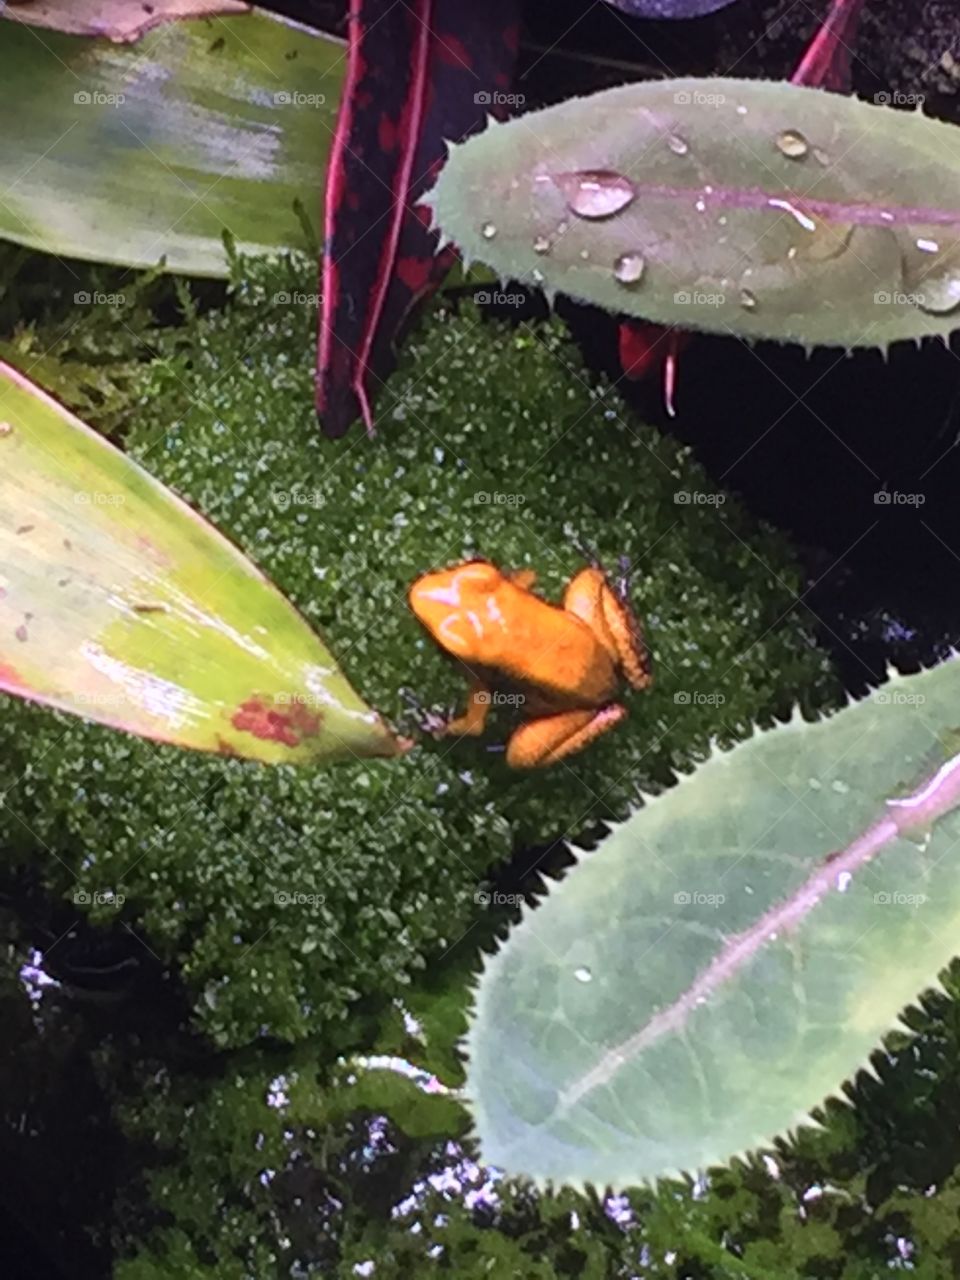 Orange and black dart frog.